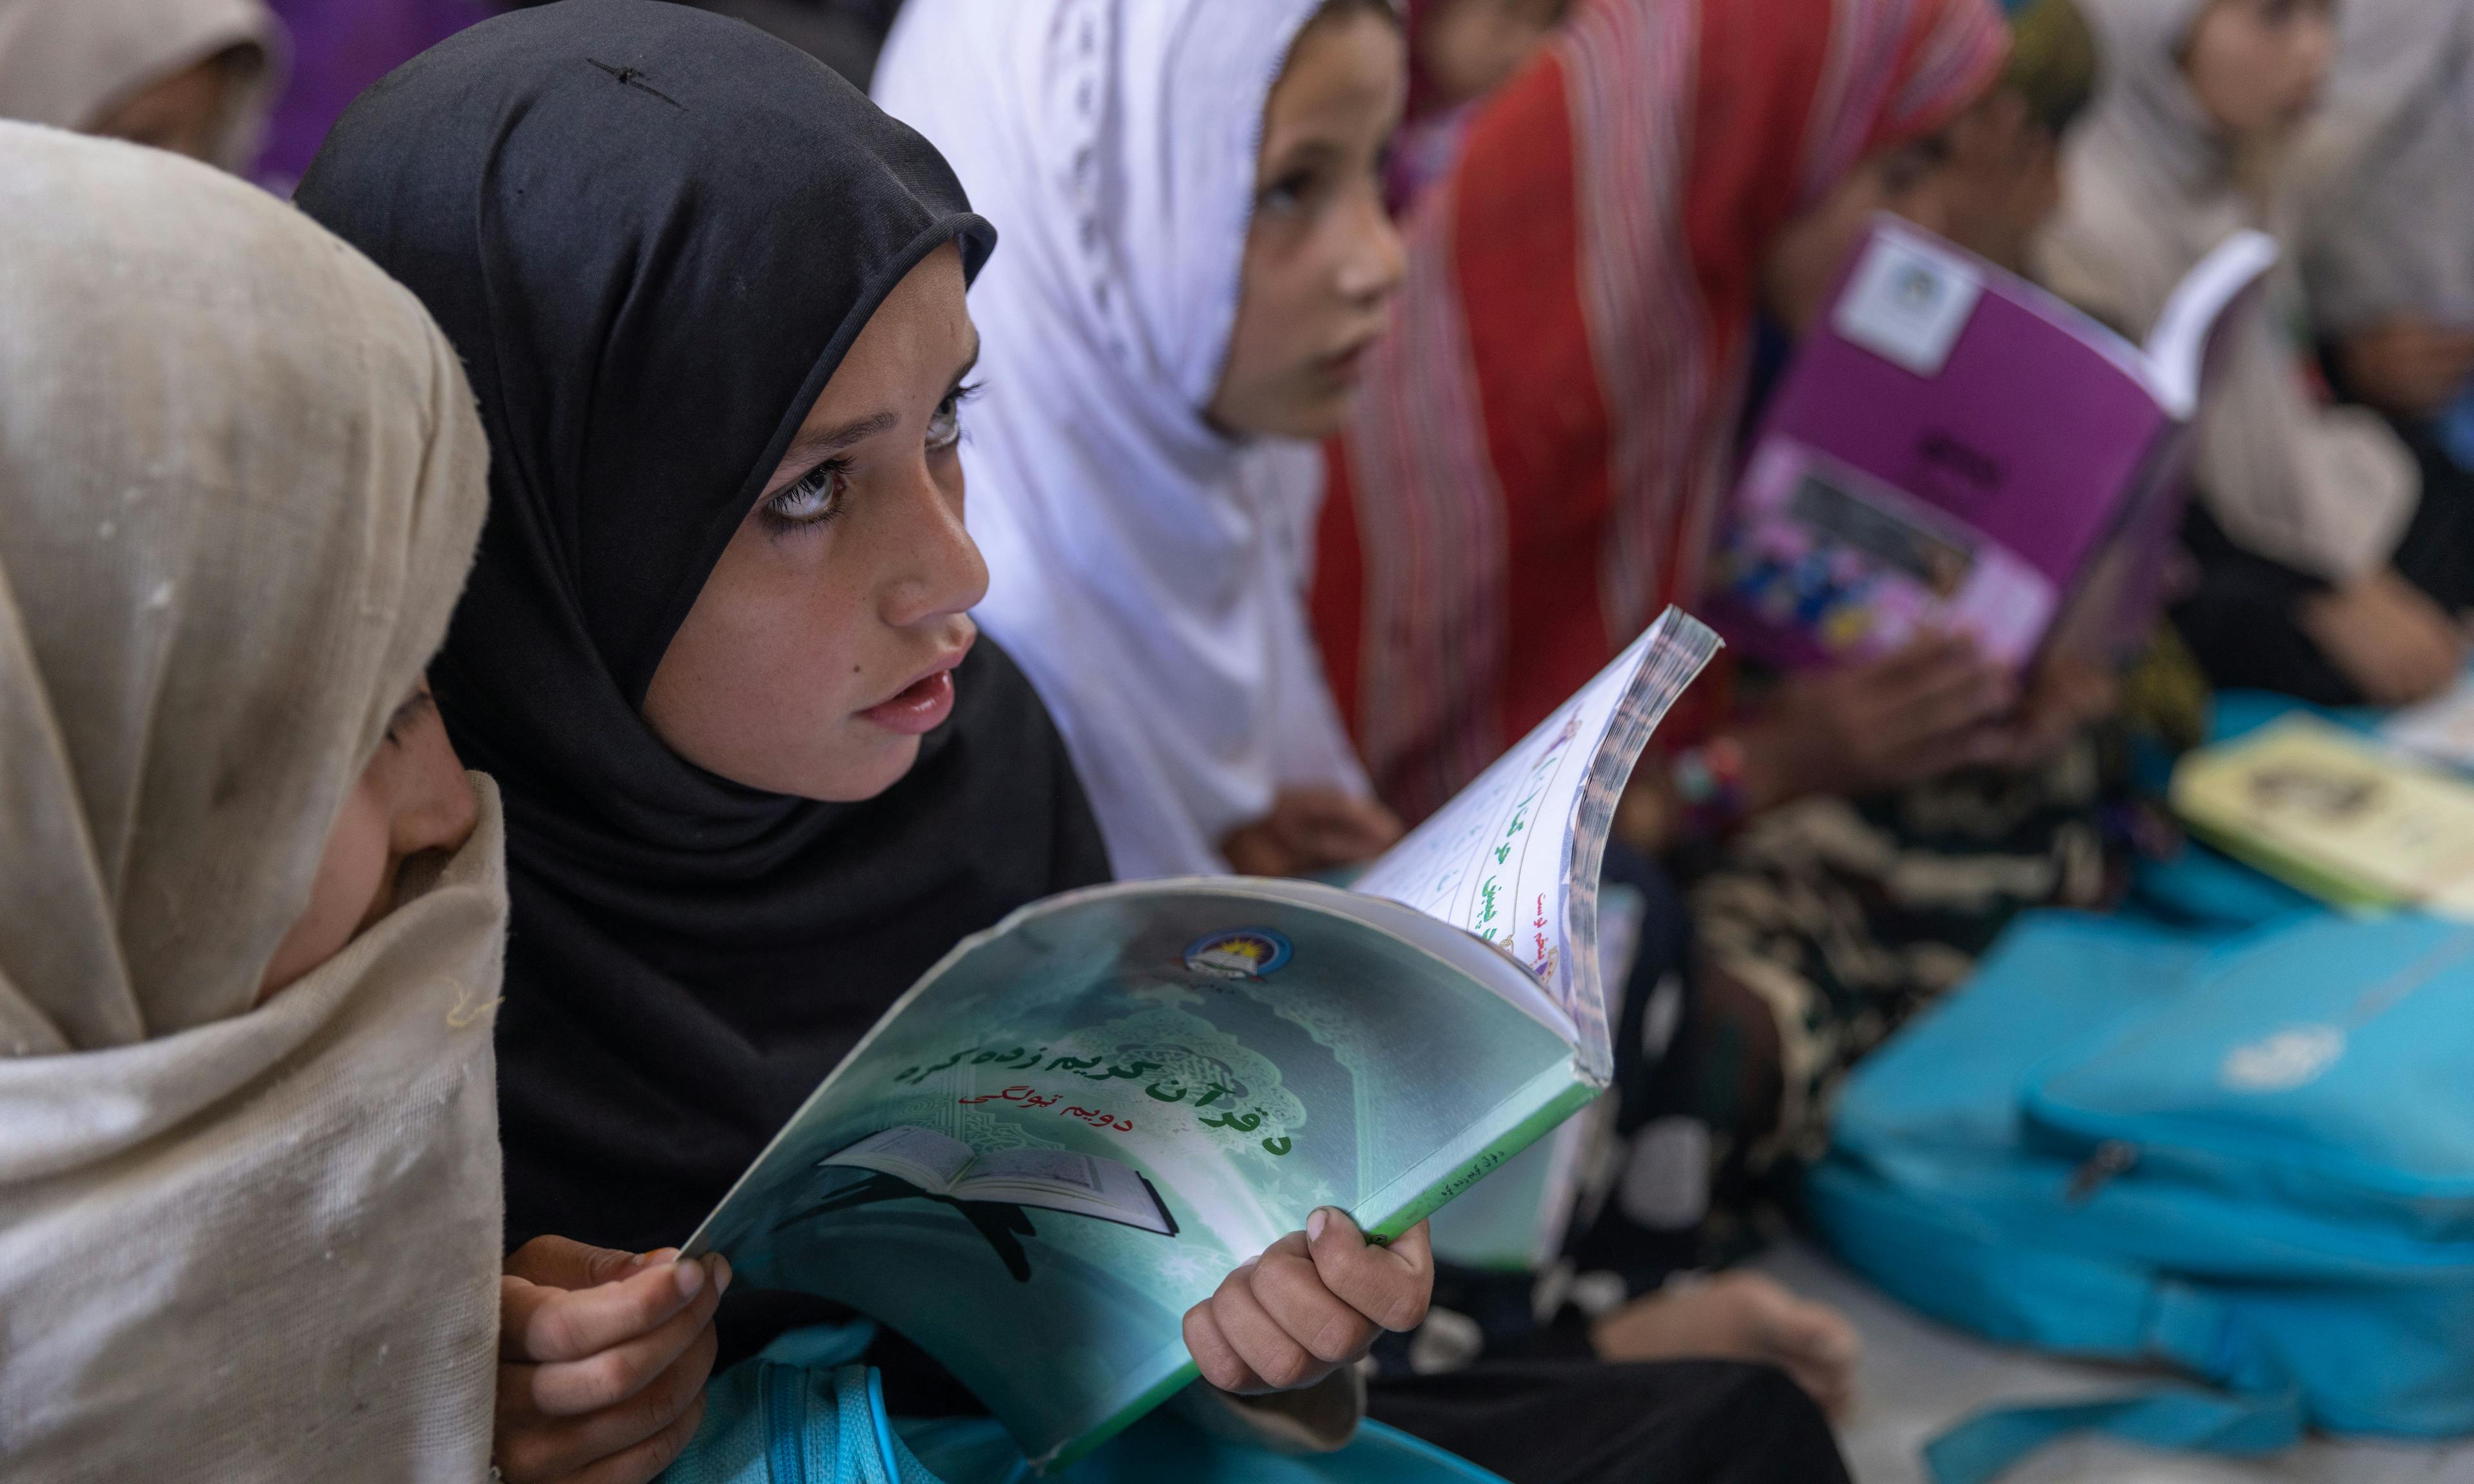 Inside her new classroom, Gulaba, 9, studies from her textbook alongside her classmates.